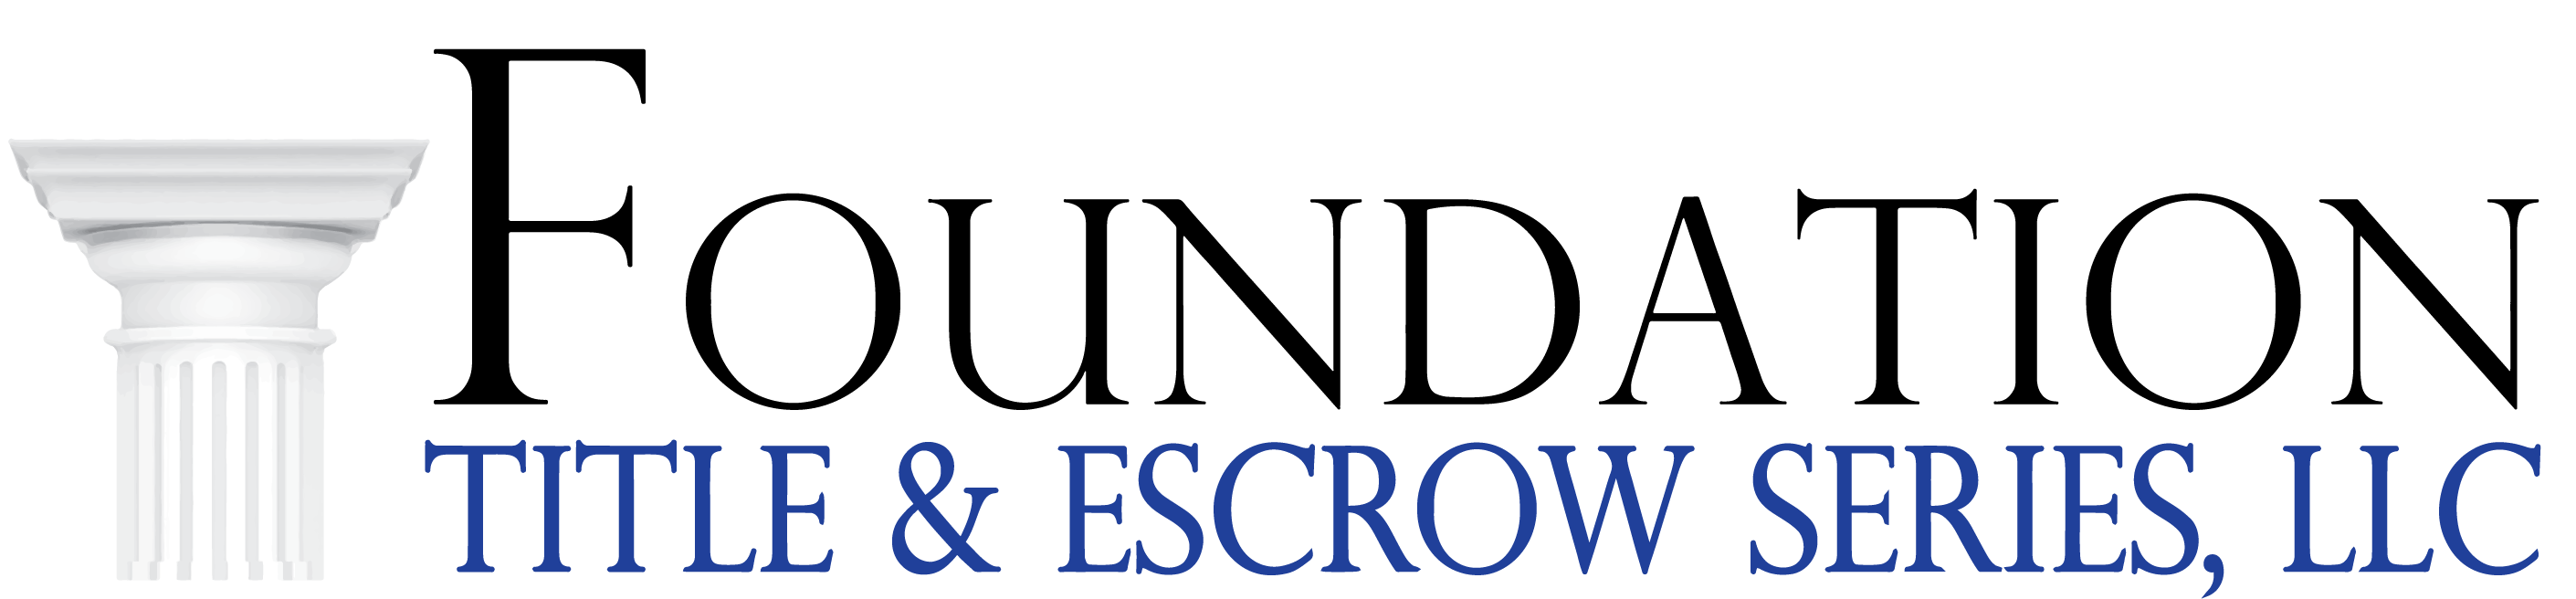 Foundation Title & Escrow